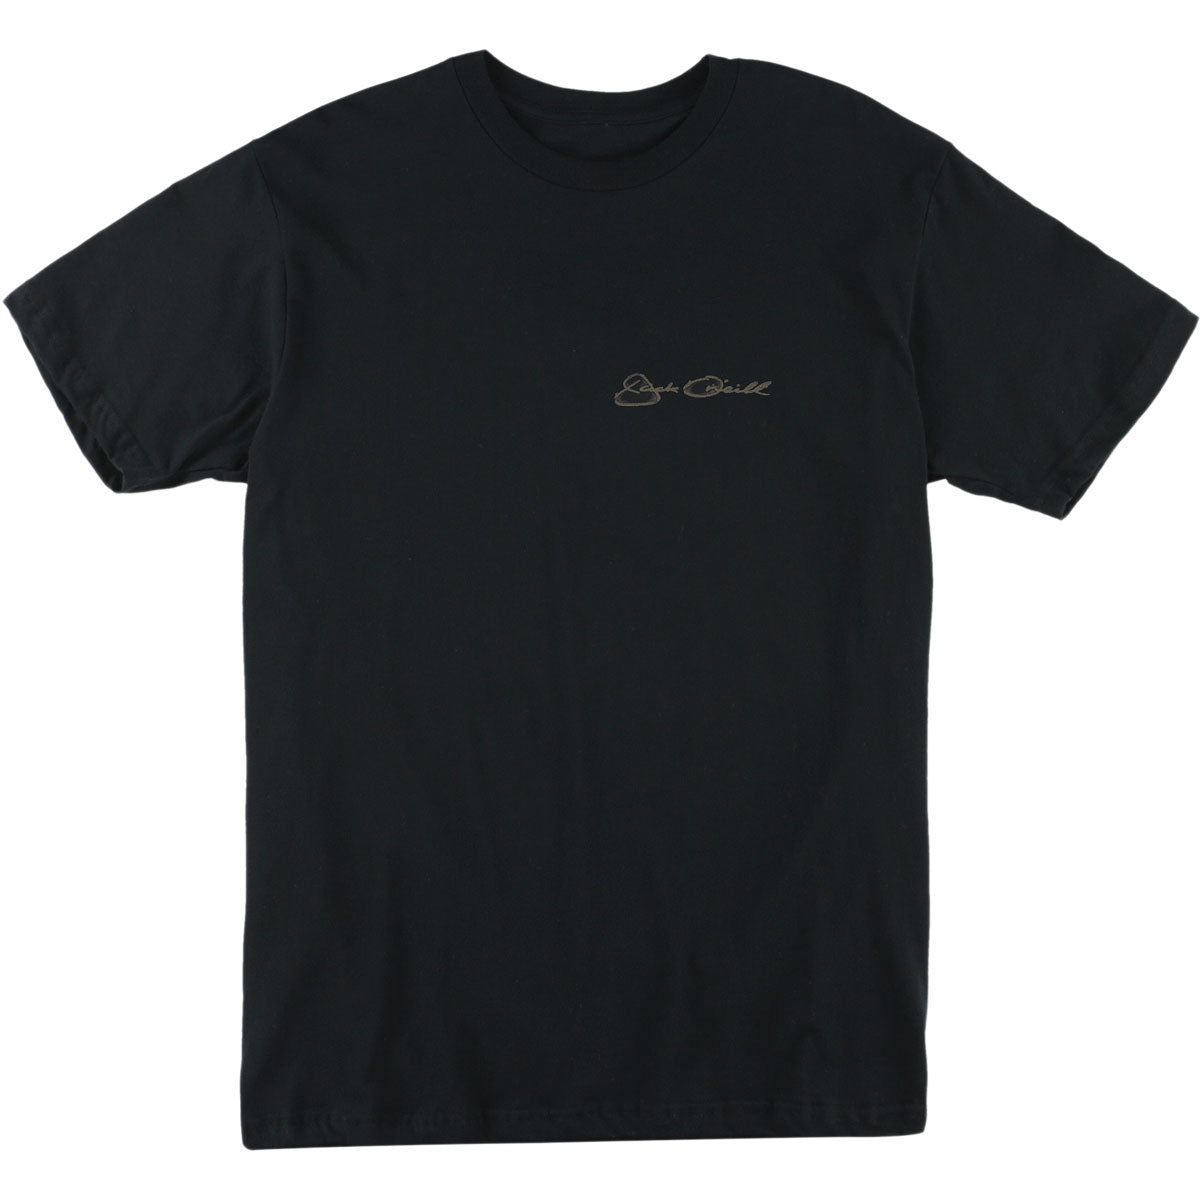 O'Neill Jack O'Neill Marlin Men's Short-Sleeve Shirts - Black